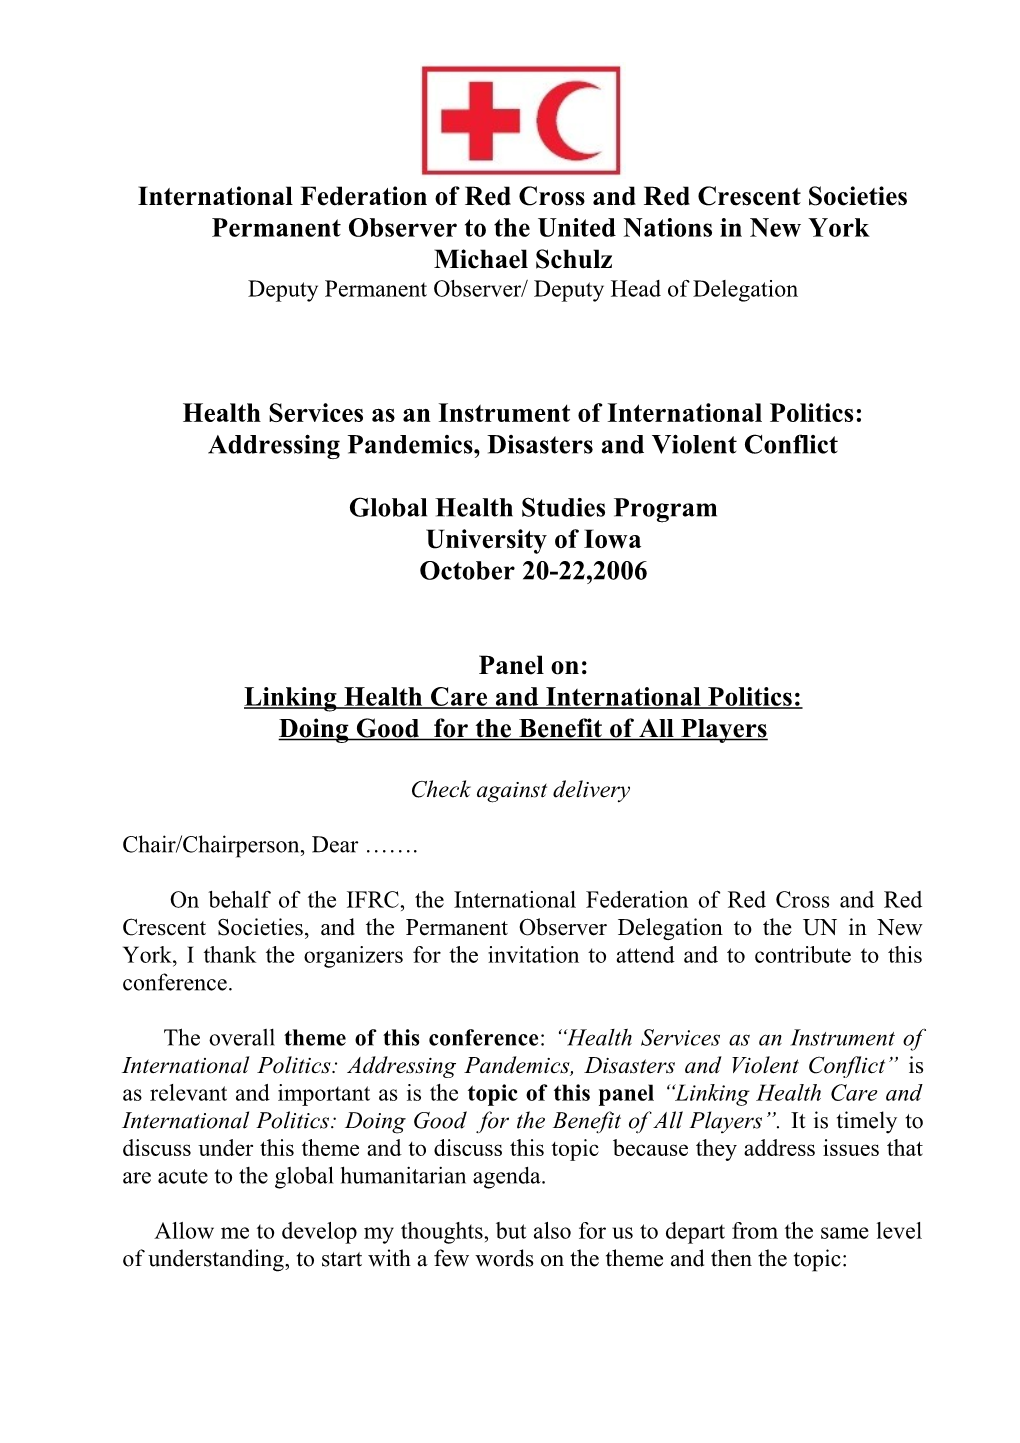 Health Services As an Instrument of International Politics